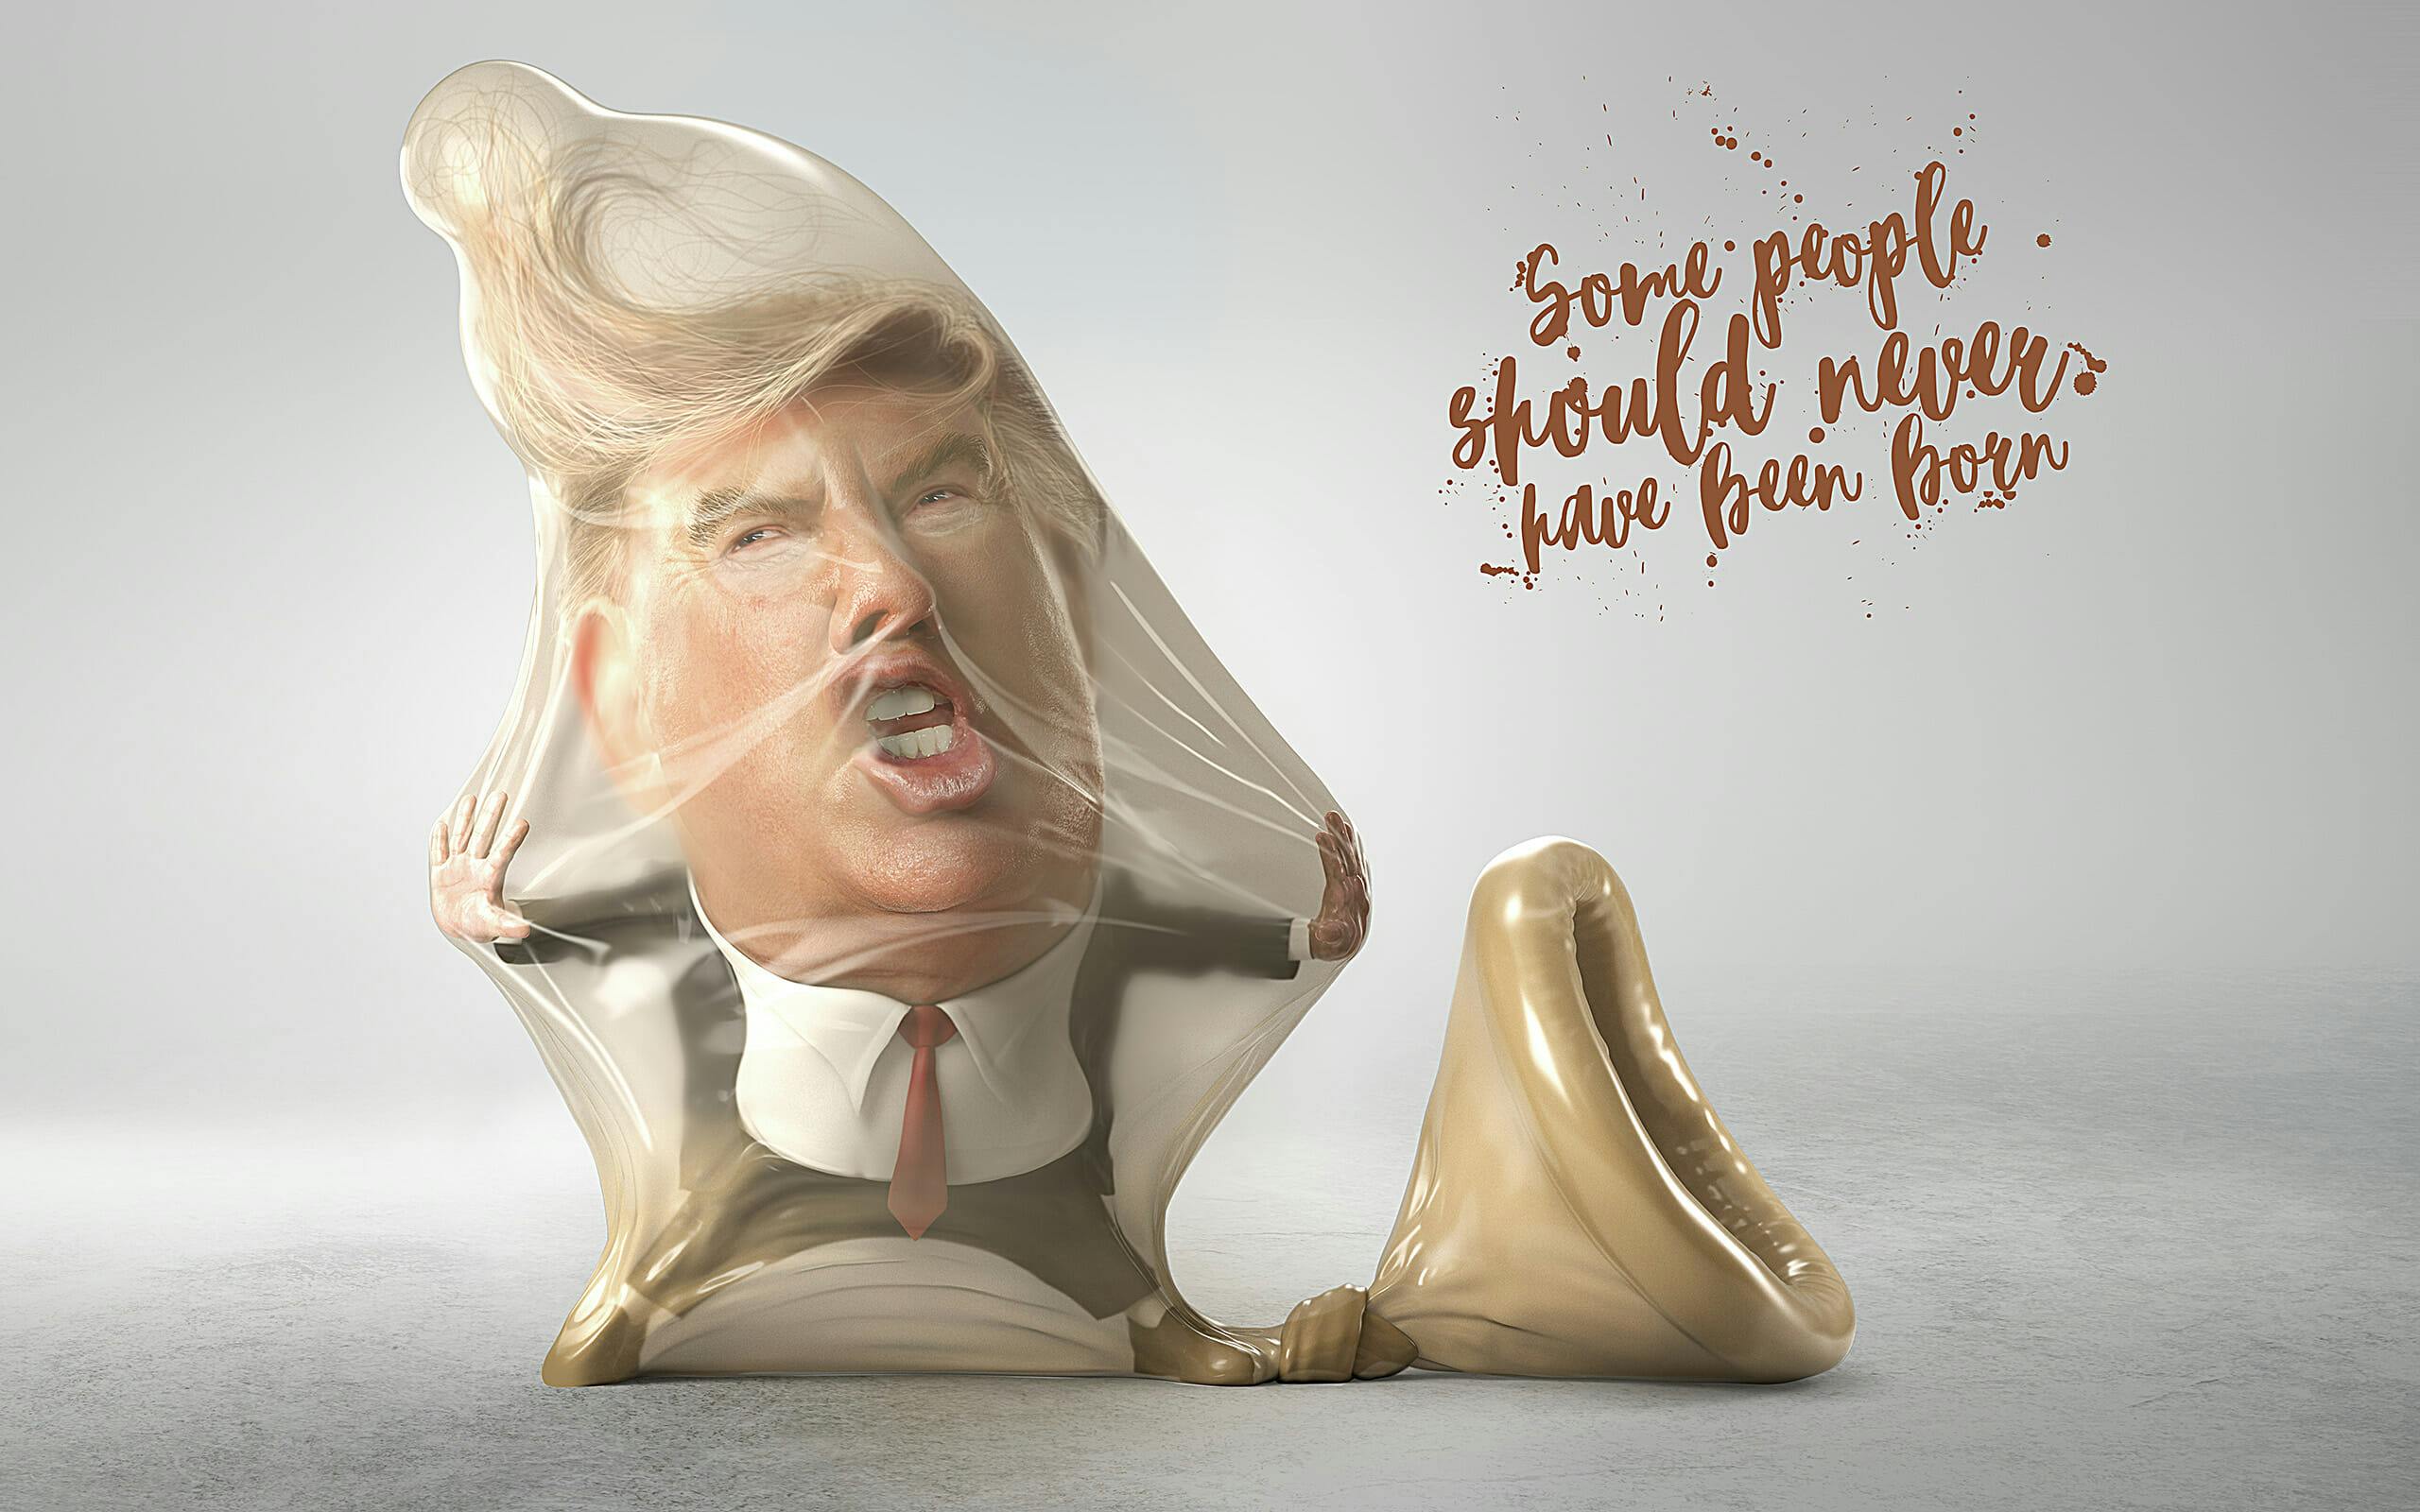 Trump condom ad